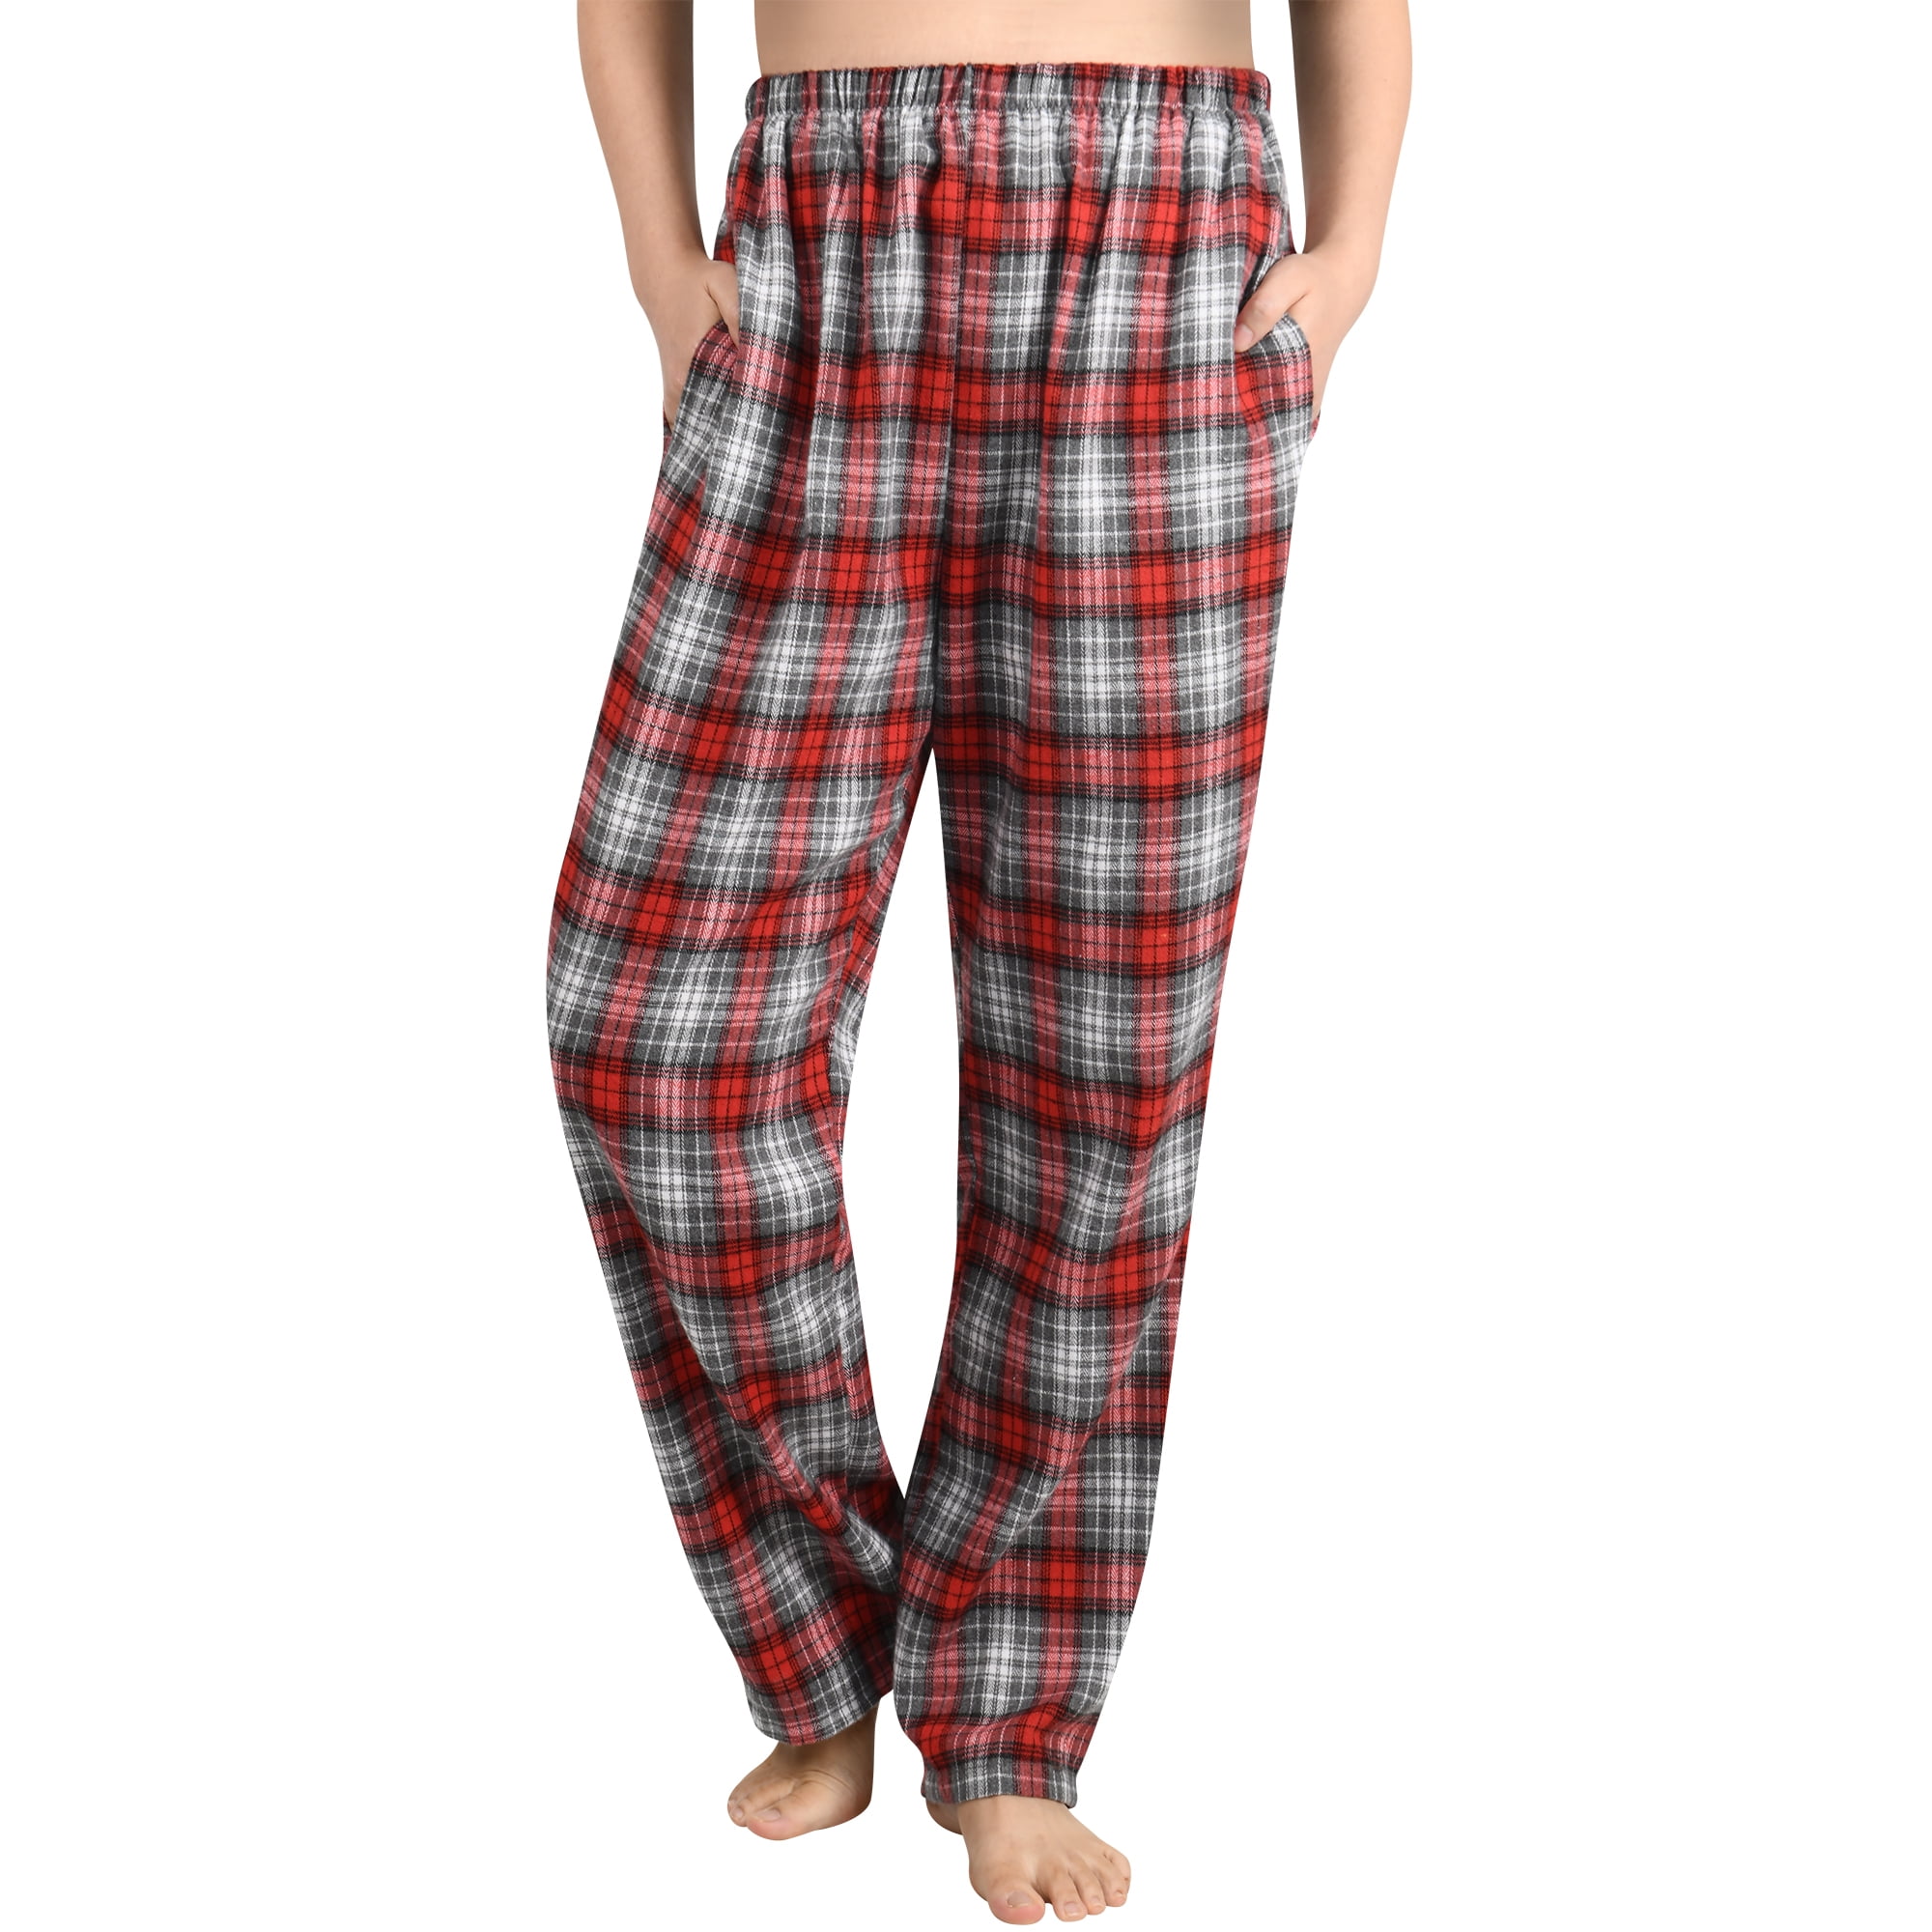 Softlife Women Fleece Pajama Pants Comfy Plaid PJ Bottoms For Women ...